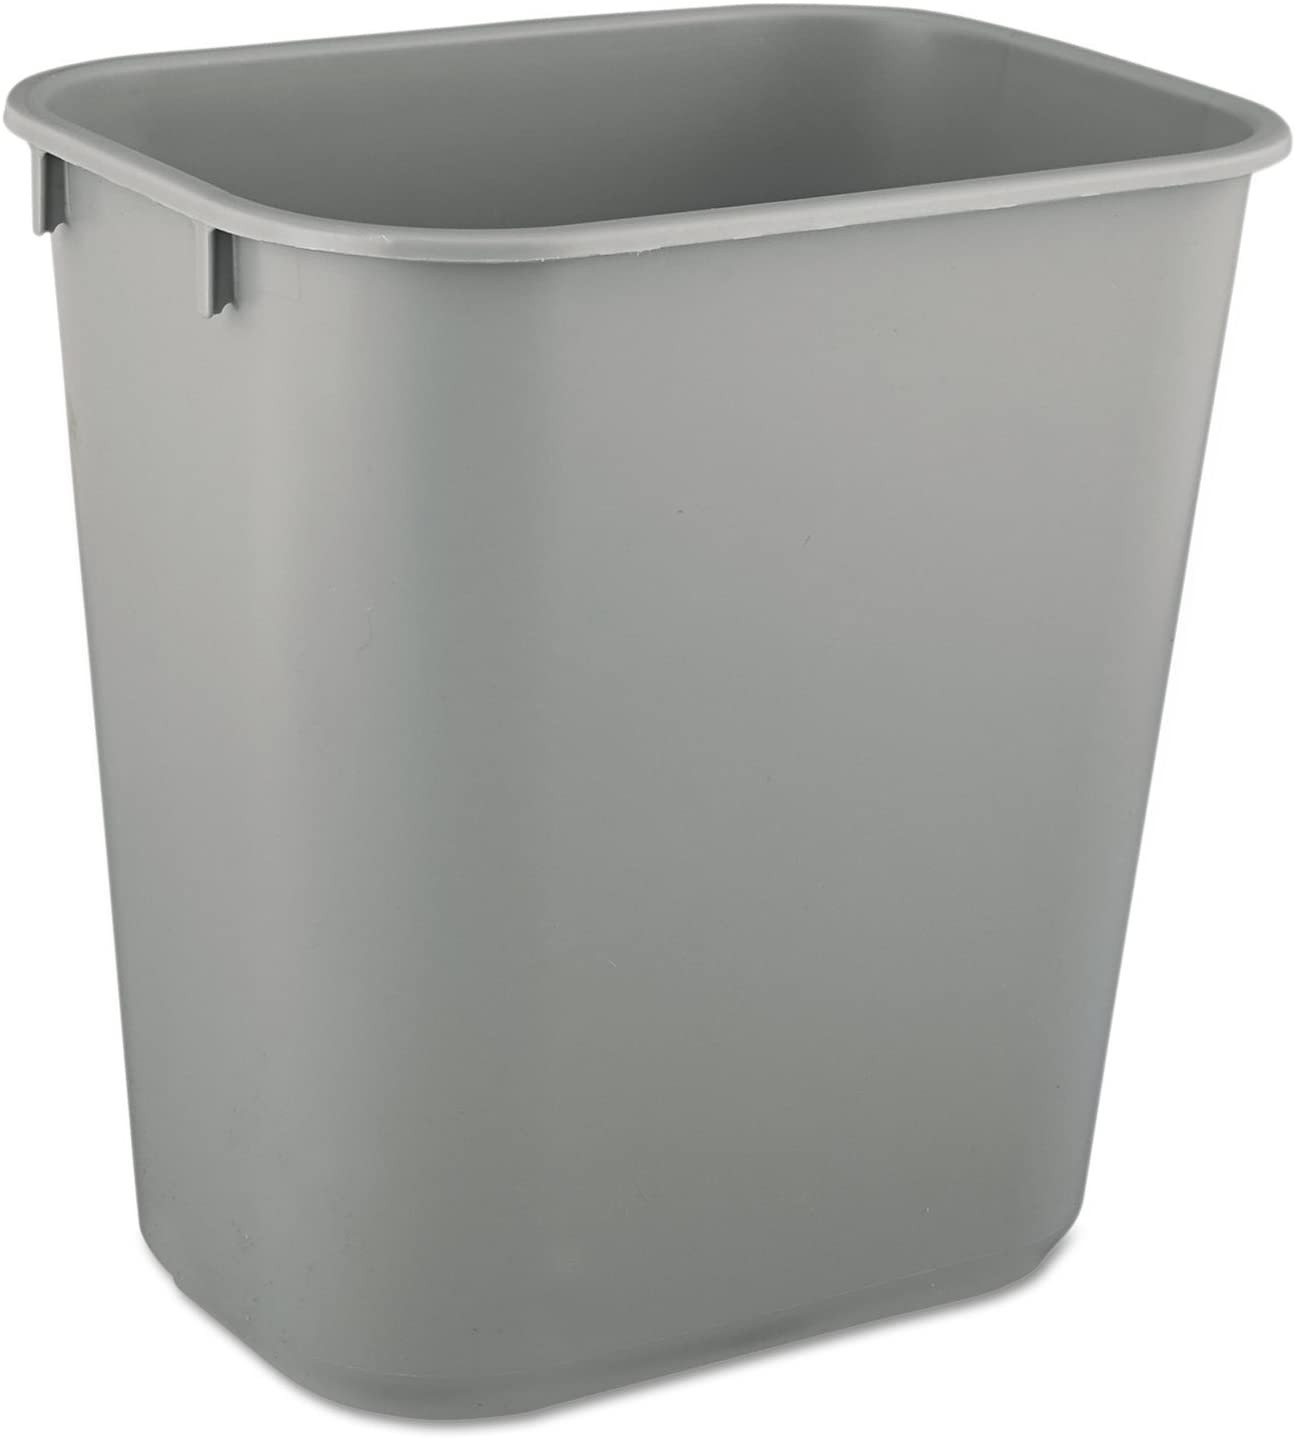 Deskside Wastebasket, 3.5 Gallon, Gray